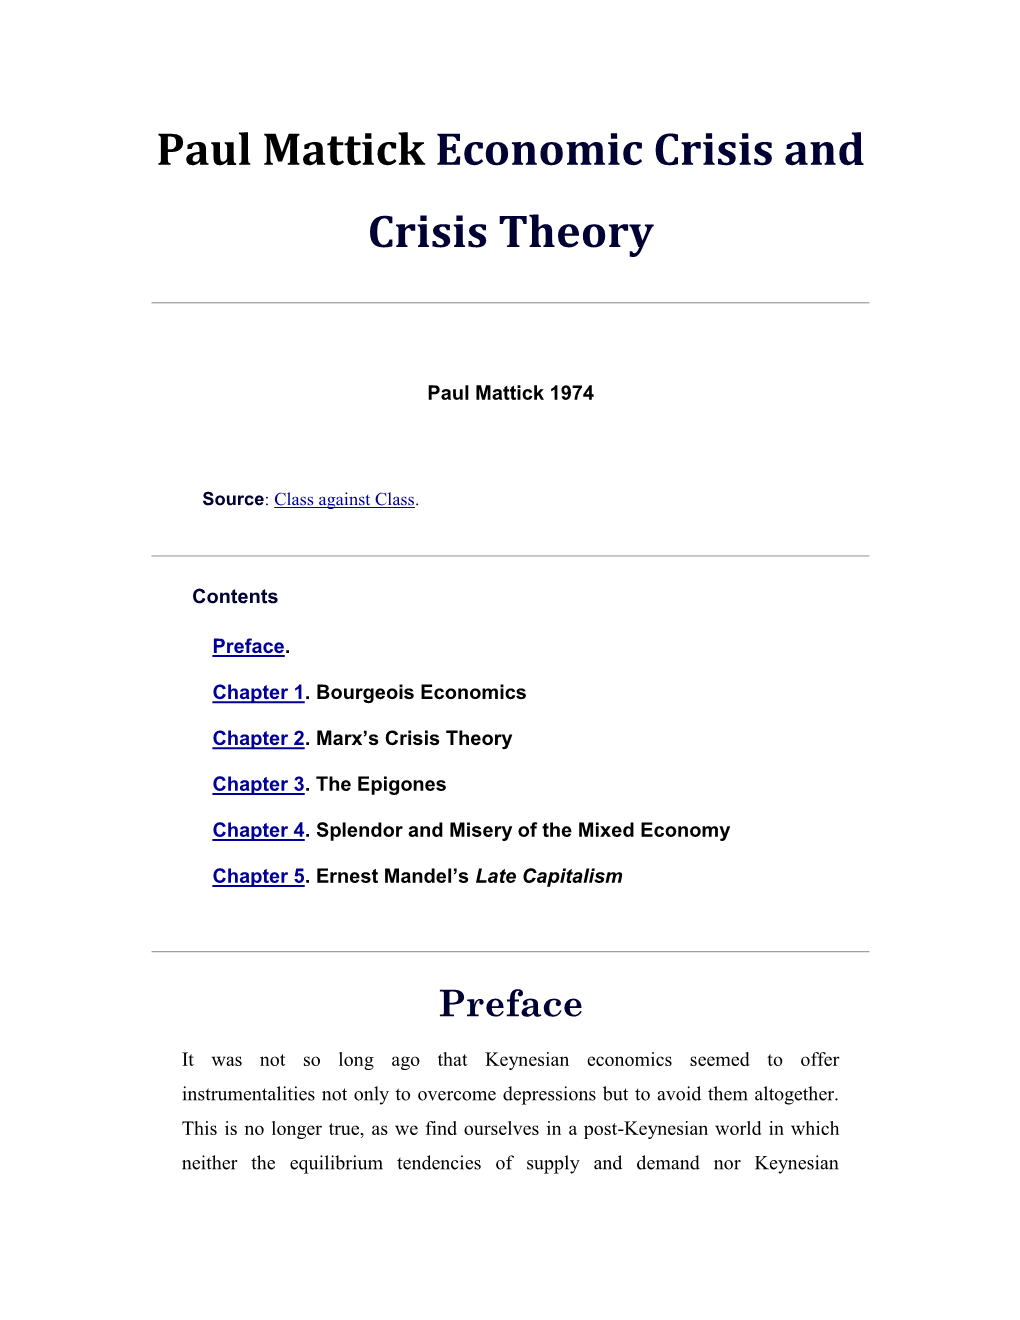 Paul Mattick Economic Crisis and Crisis Theory.Pdf